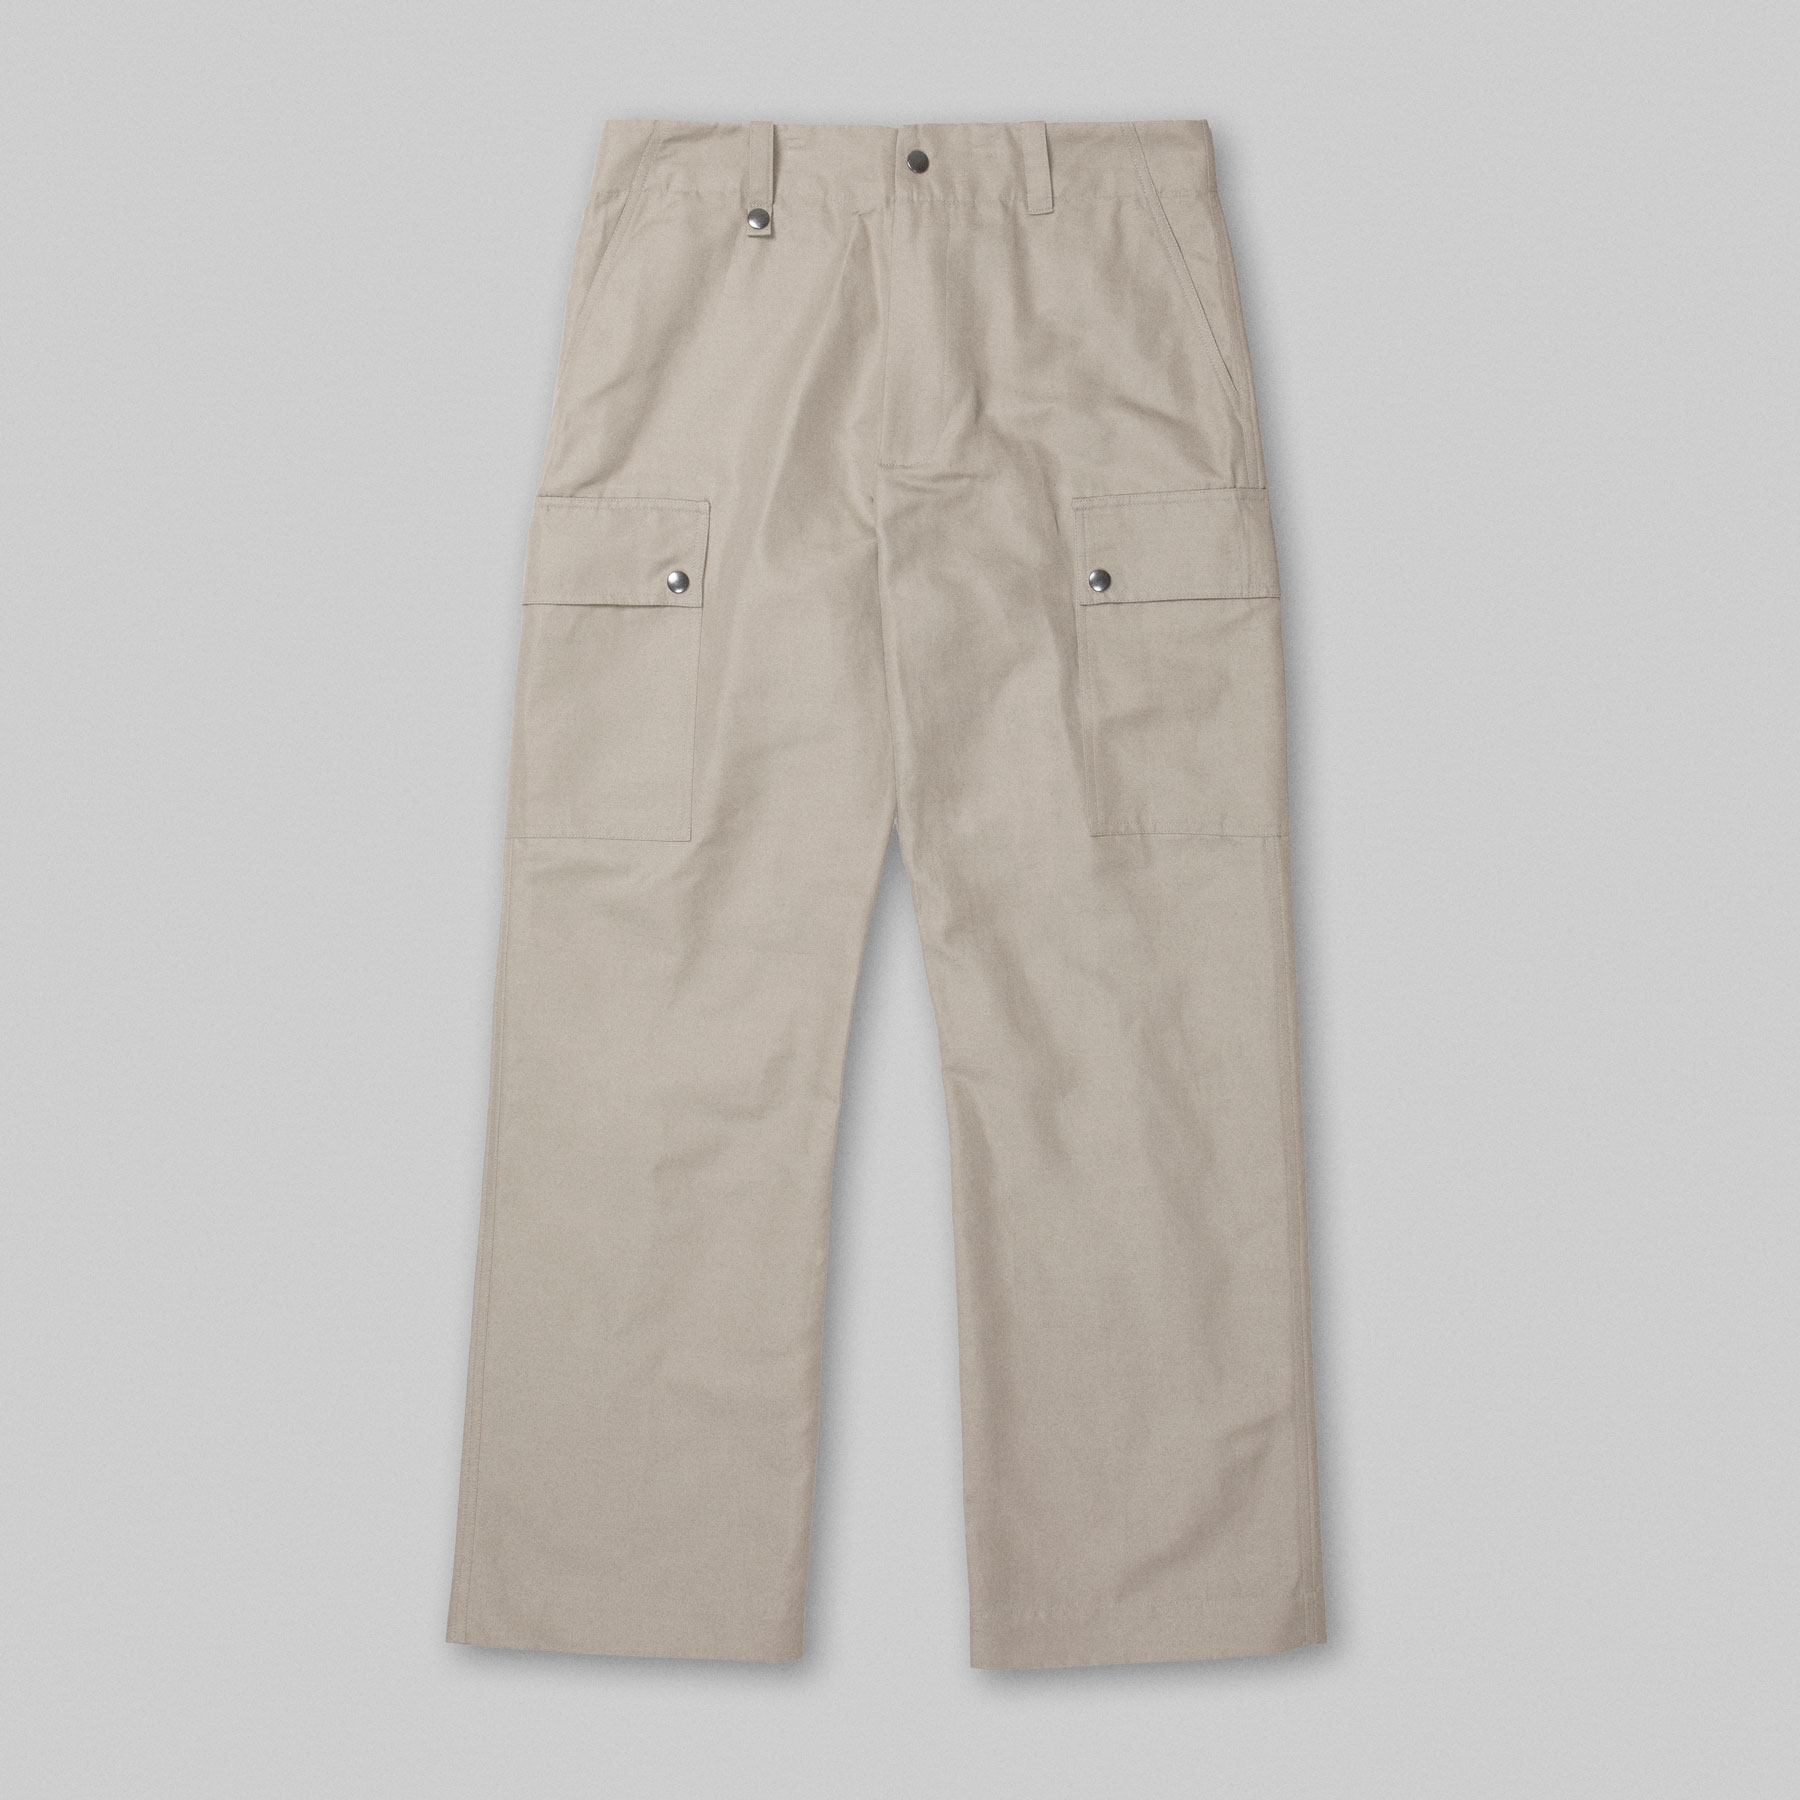 DECK Pants by Arpenteur in Stone color